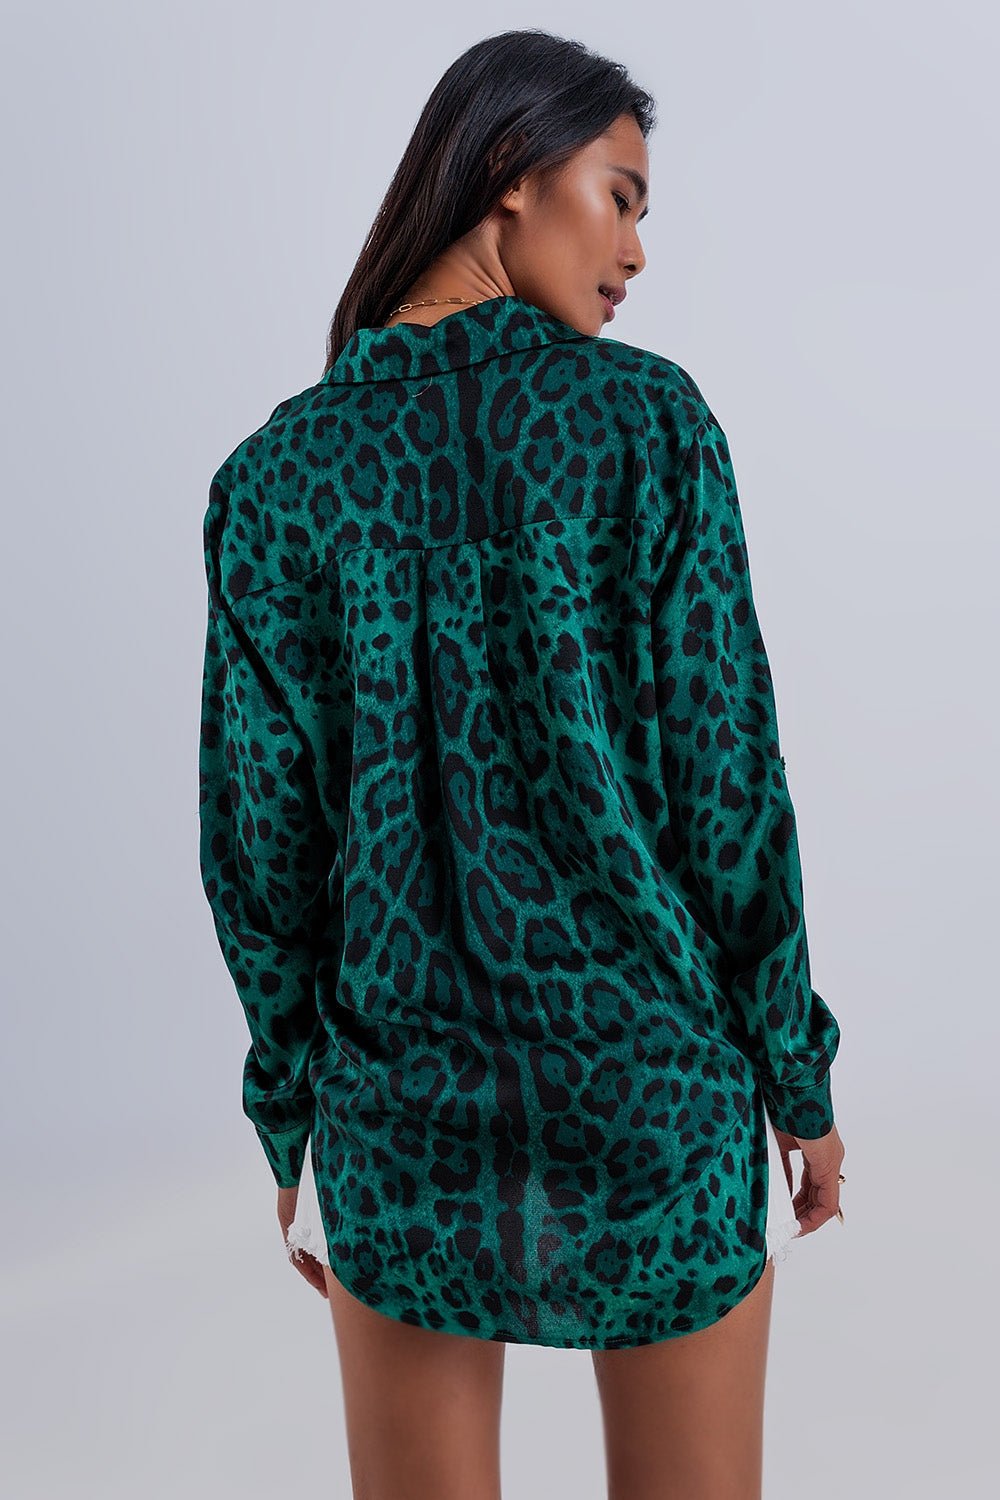 Long Sleeve Soft Shirt in Green Animal Print - Mack & Harvie